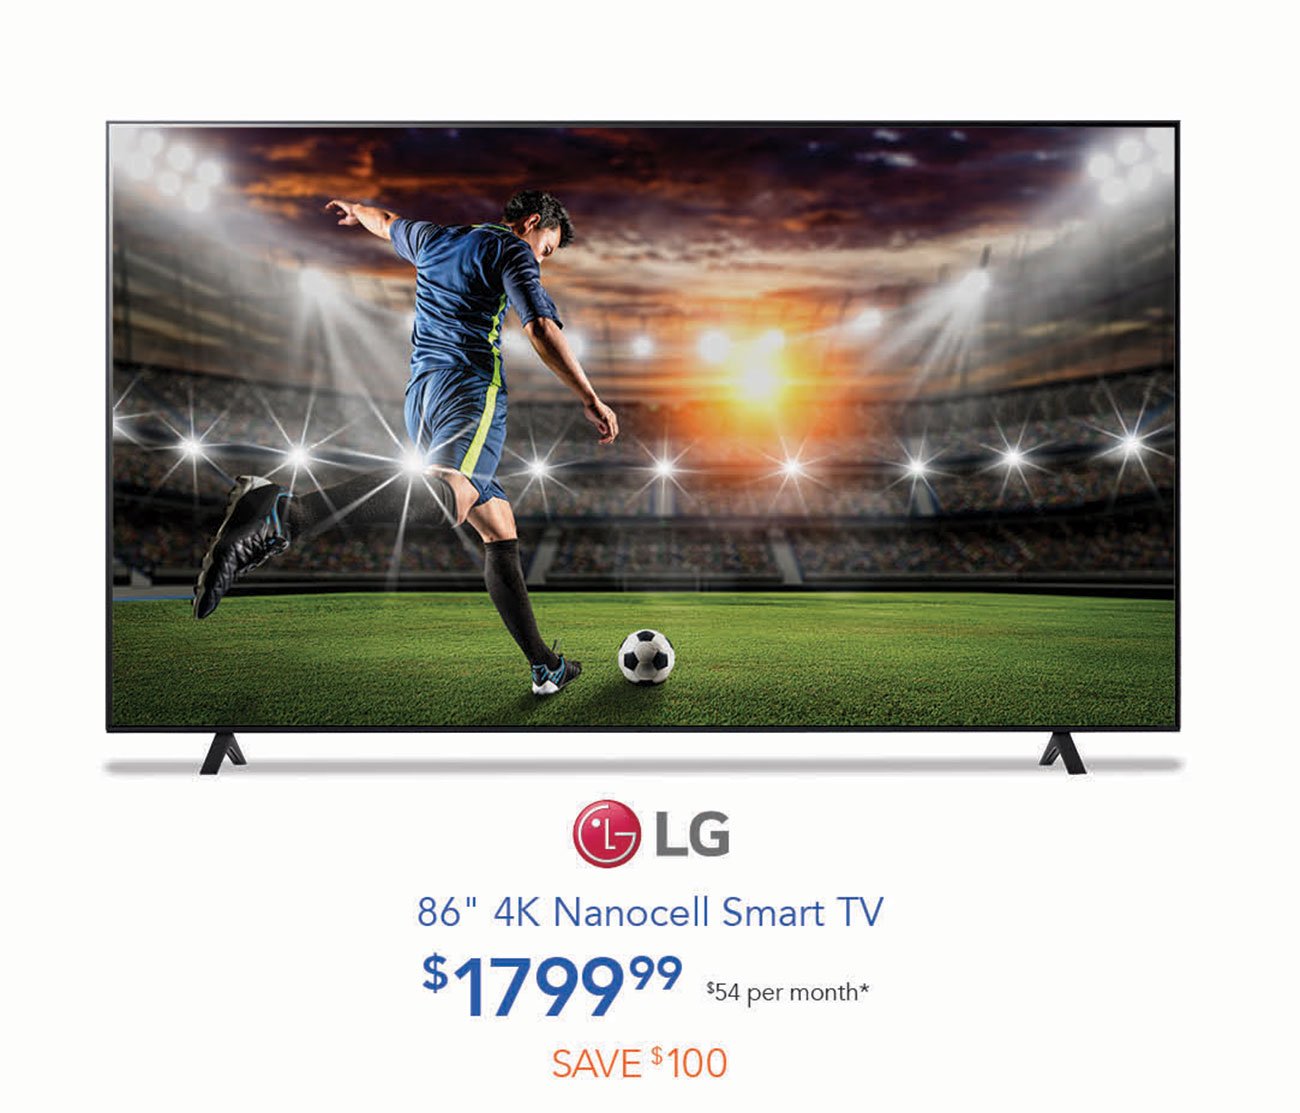  Lj LG 86" 4K Nanocell Smart TV $1 799 99 $54 per month* 